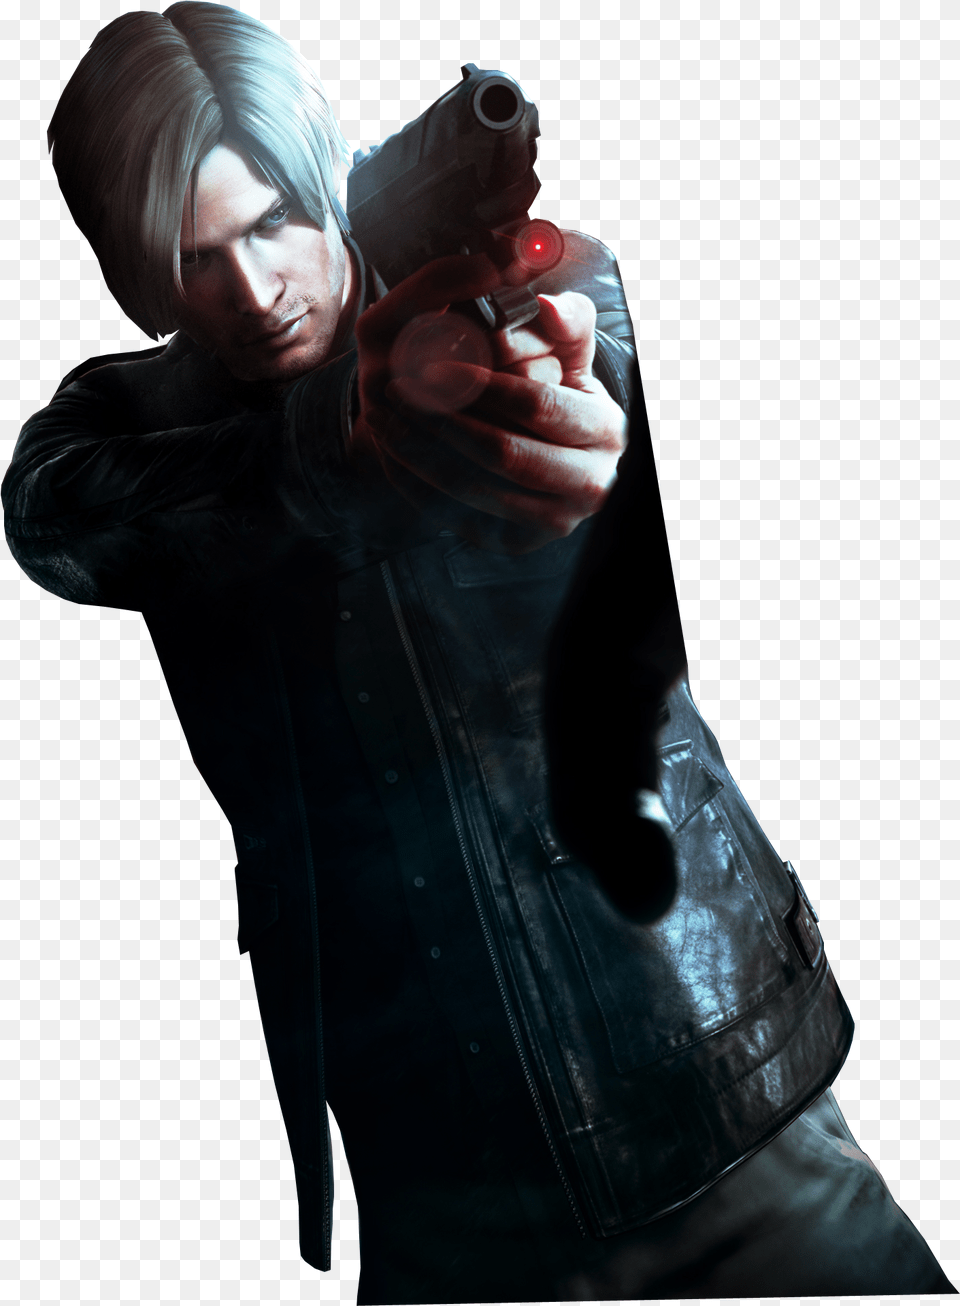 Resident Evil 6 Wallpaper Hd, Gun, Body Part, Weapon, Person Png